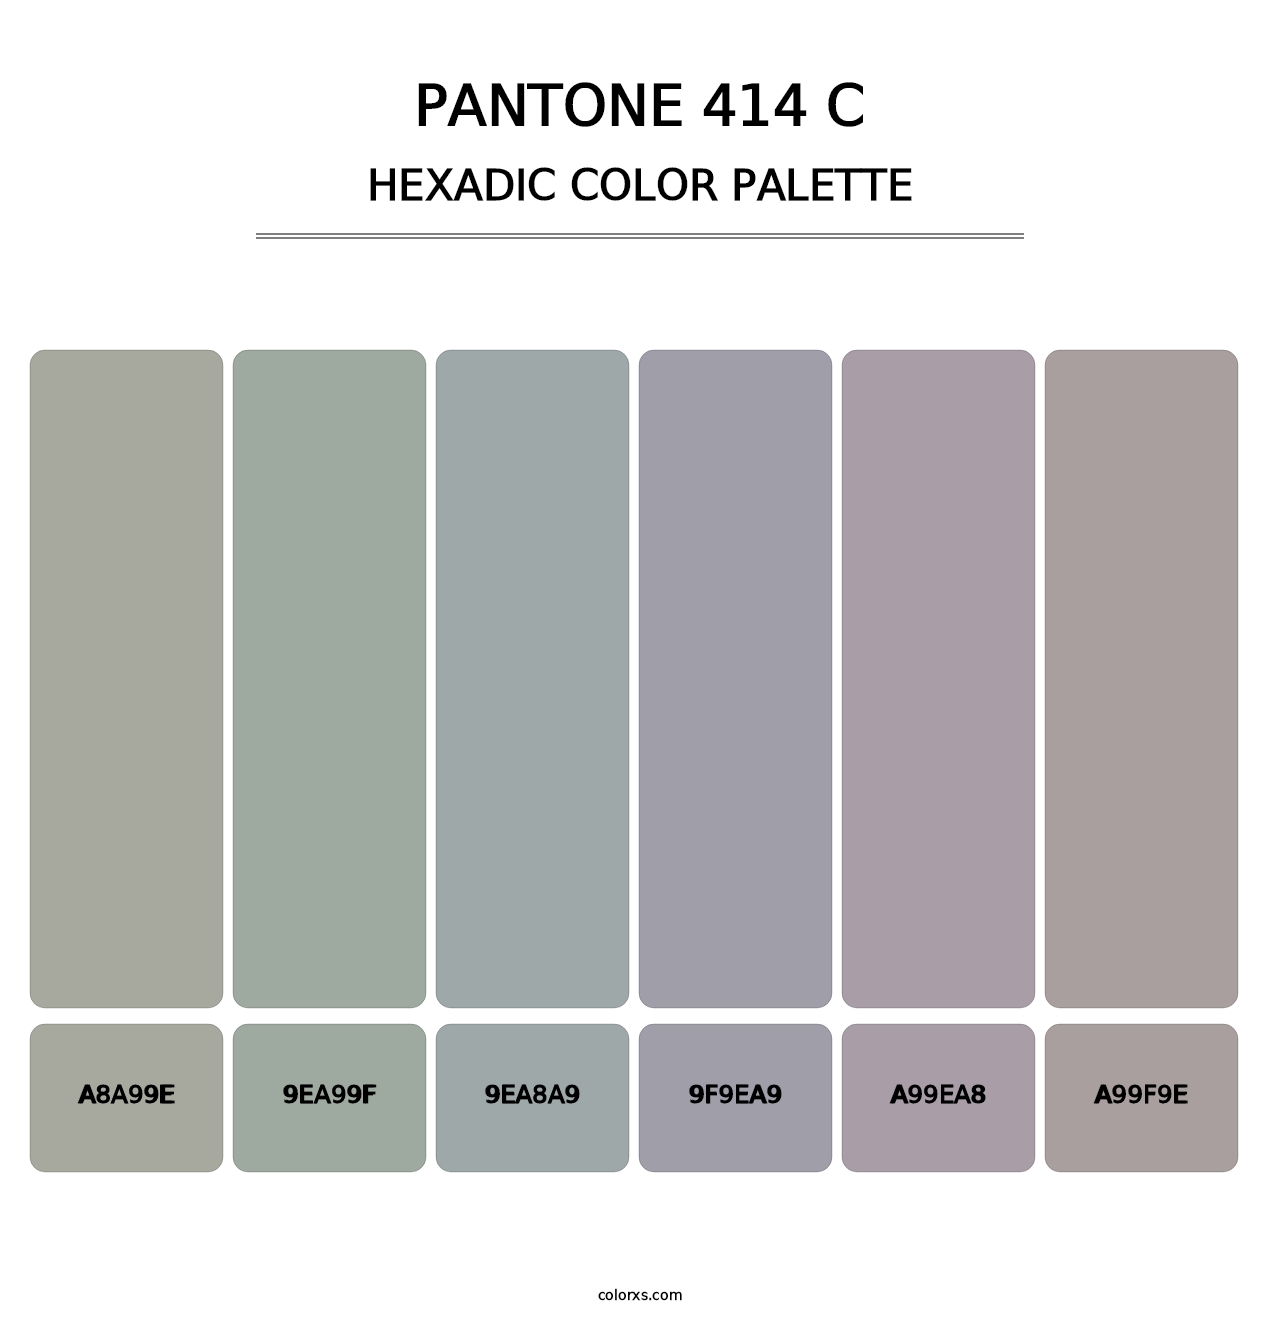 PANTONE 414 C - Hexadic Color Palette